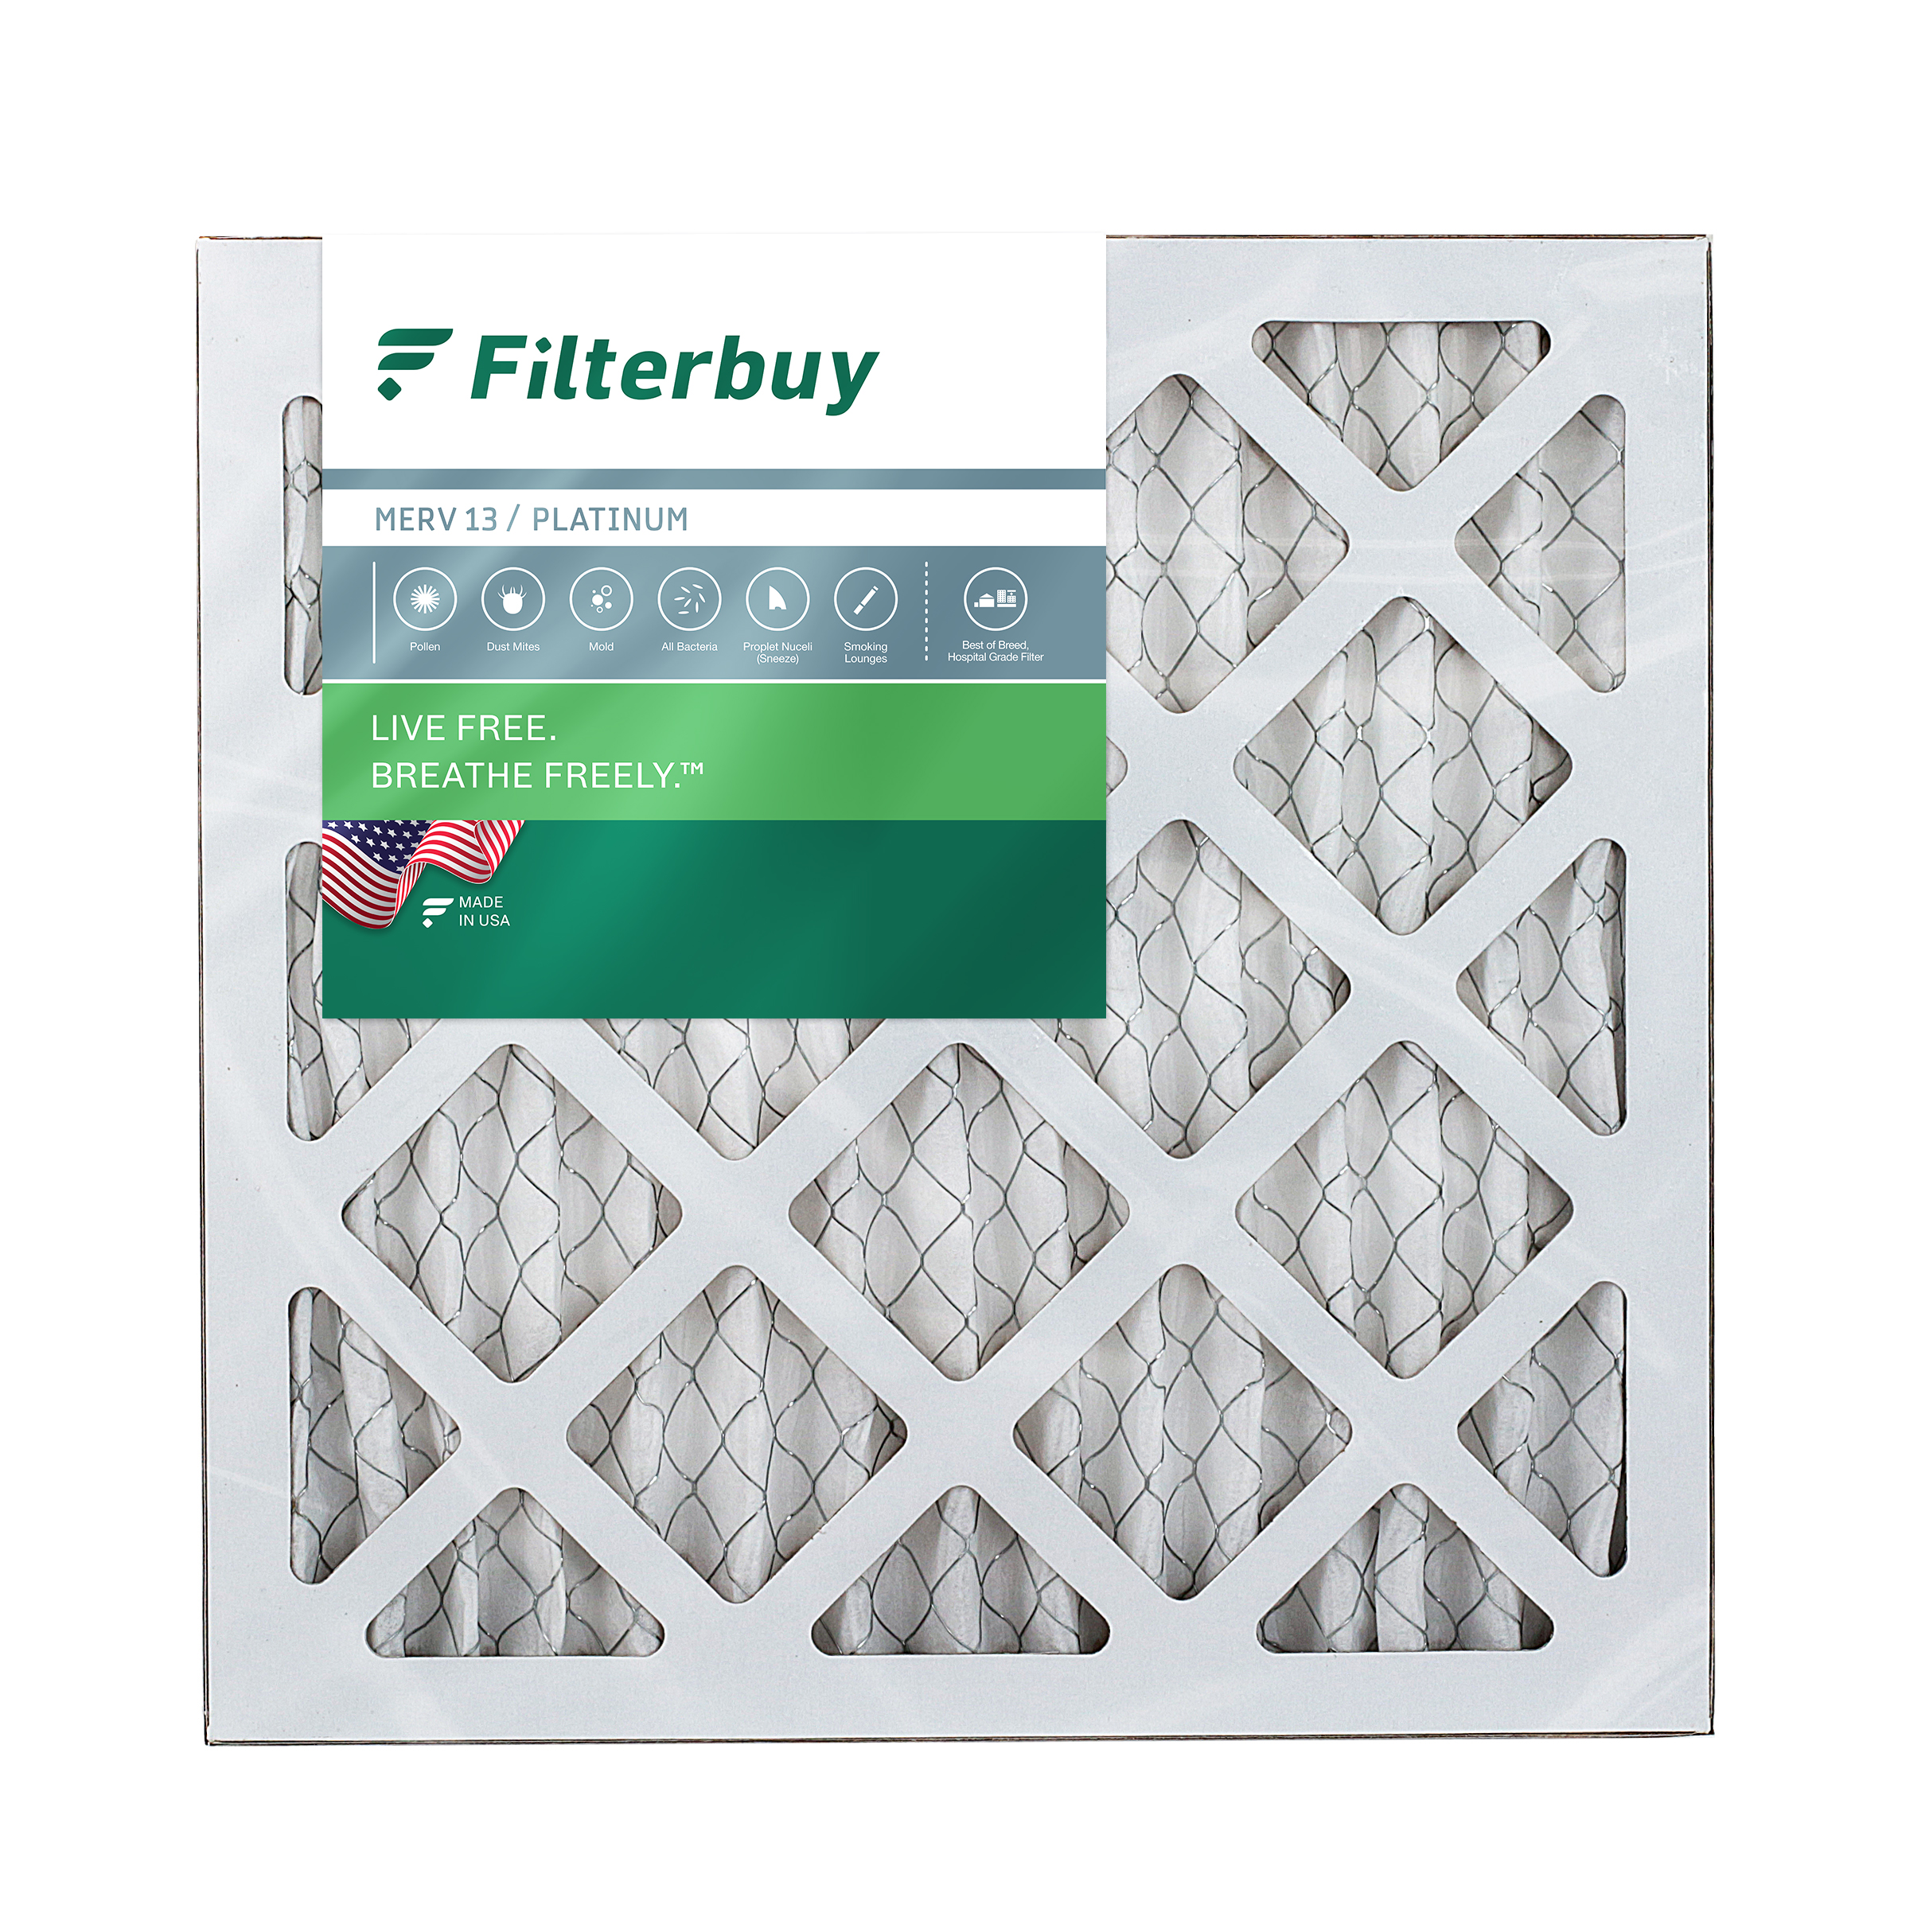 6-Pack, Platinum FilterBuy 15x25x4 Air Filter MERV 13 Pleated HVAC AC Furnace Filters 